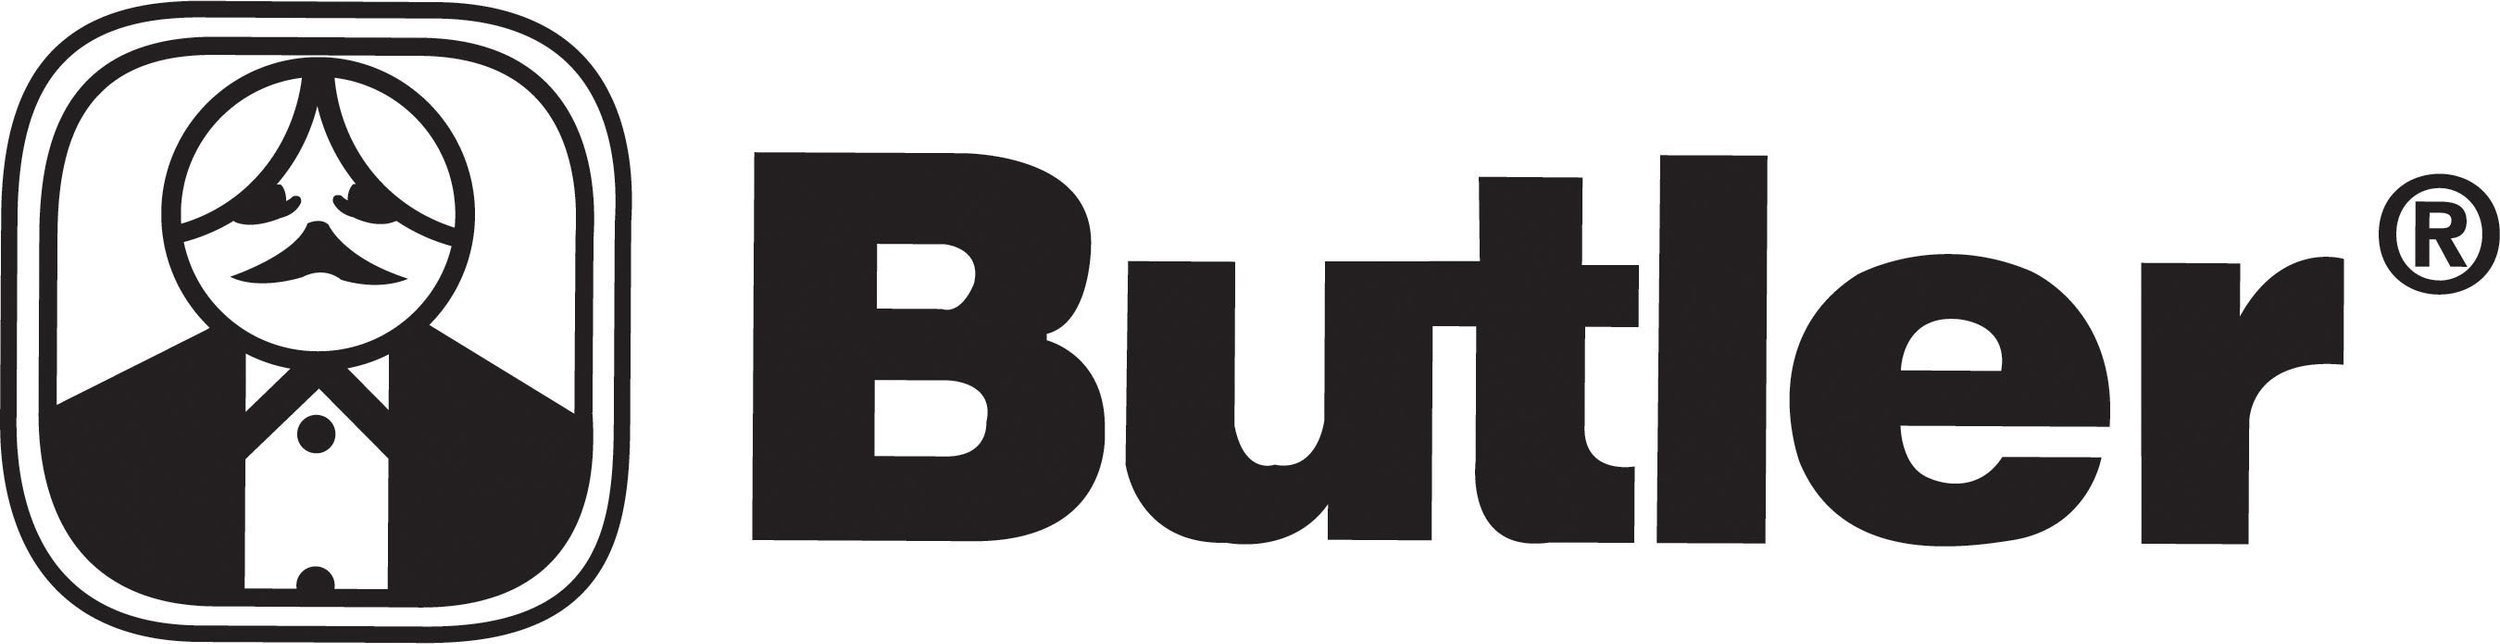 Butler Logo.jpg